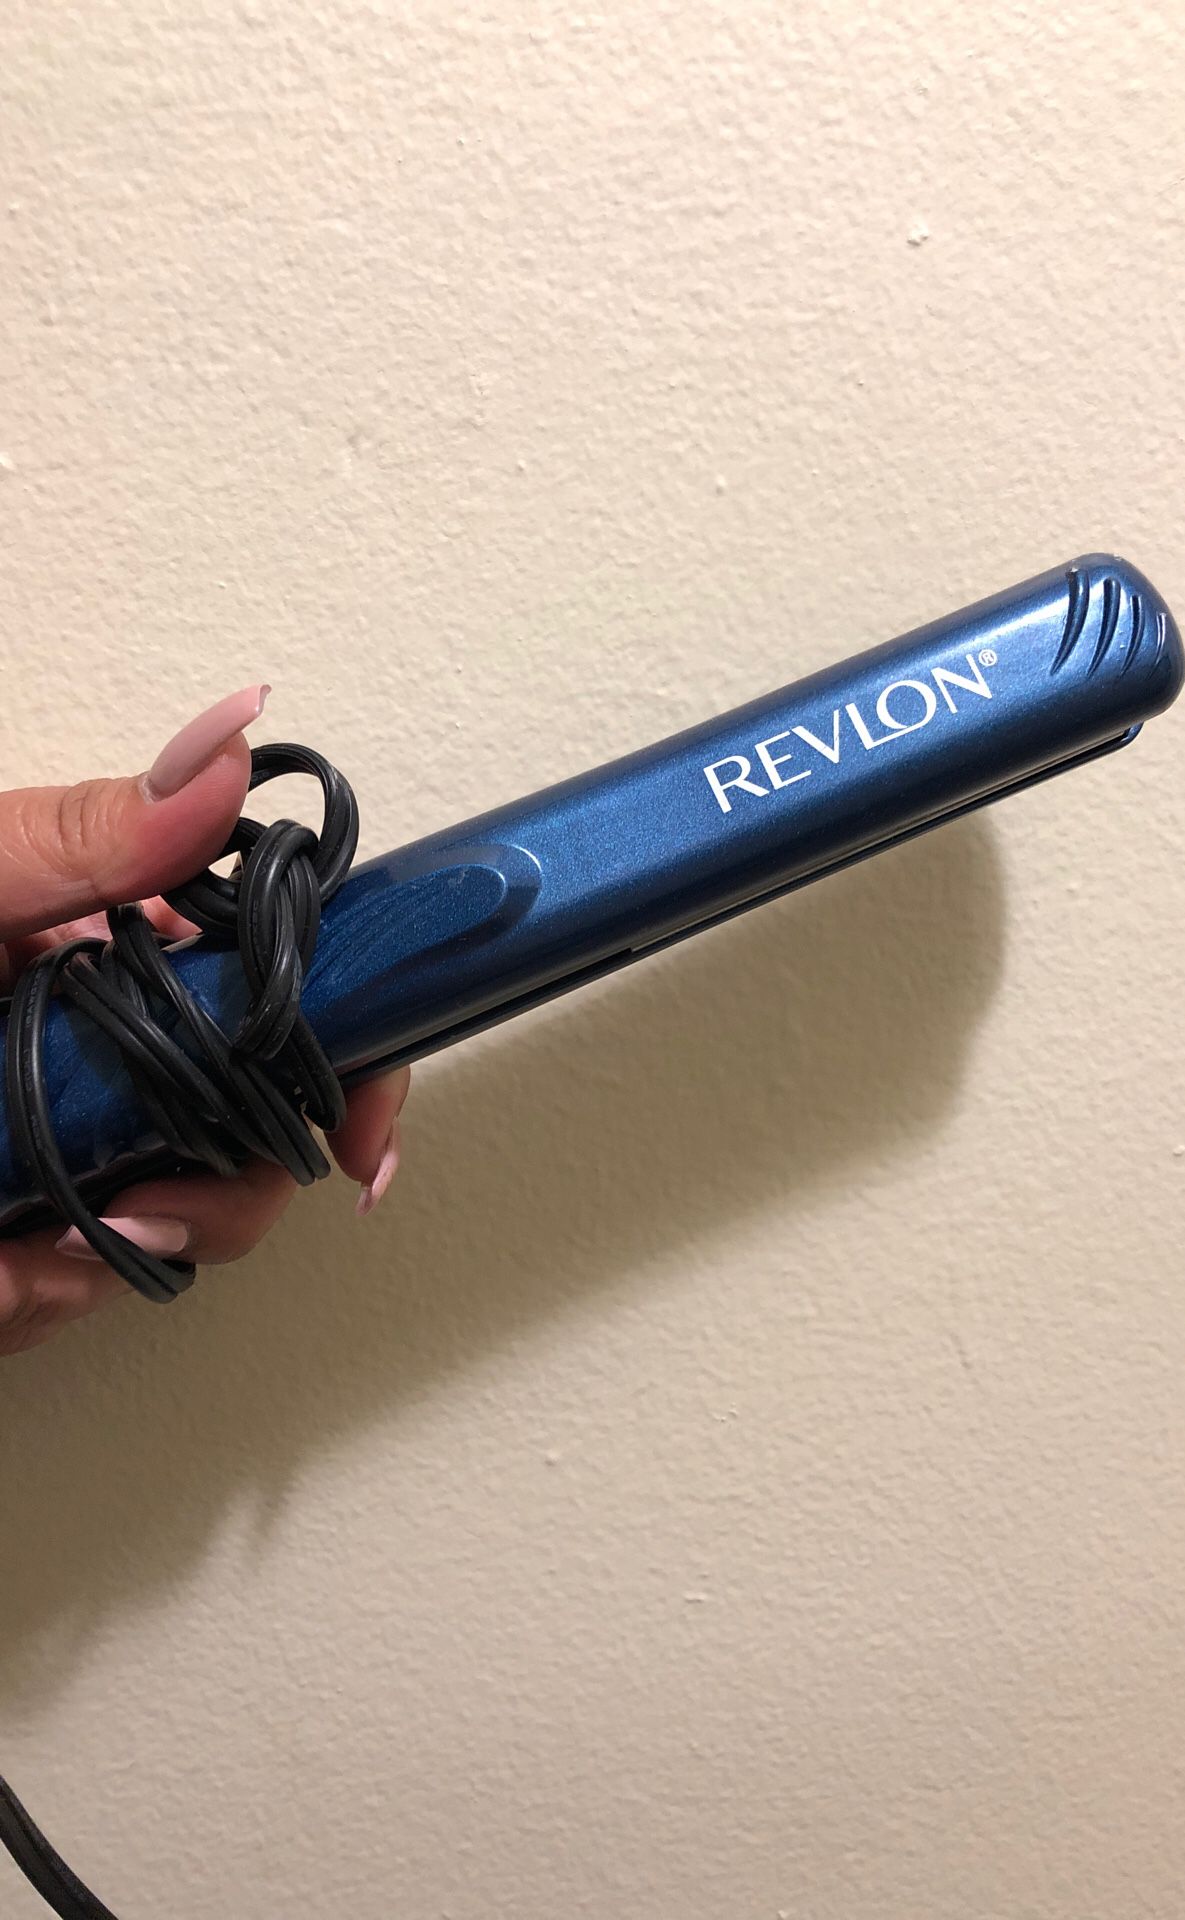 Revlon Hair Straightener / Iron